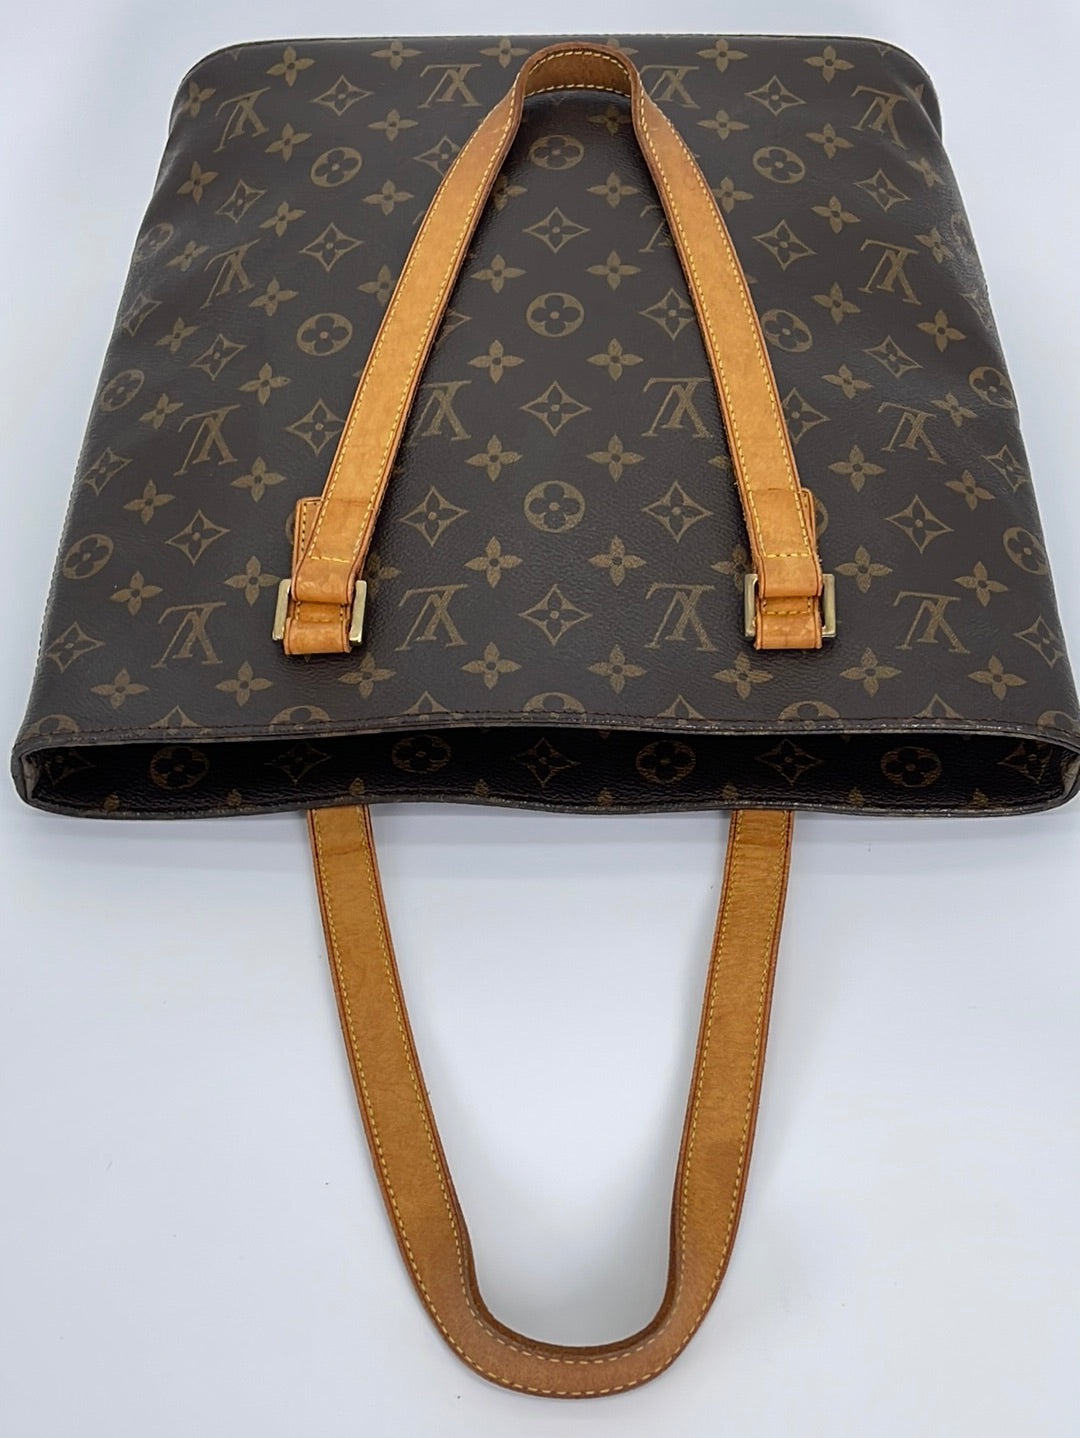 Vavin GM, Used & Preloved Louis Vuitton Tote Bag, LXR Canada, Brown